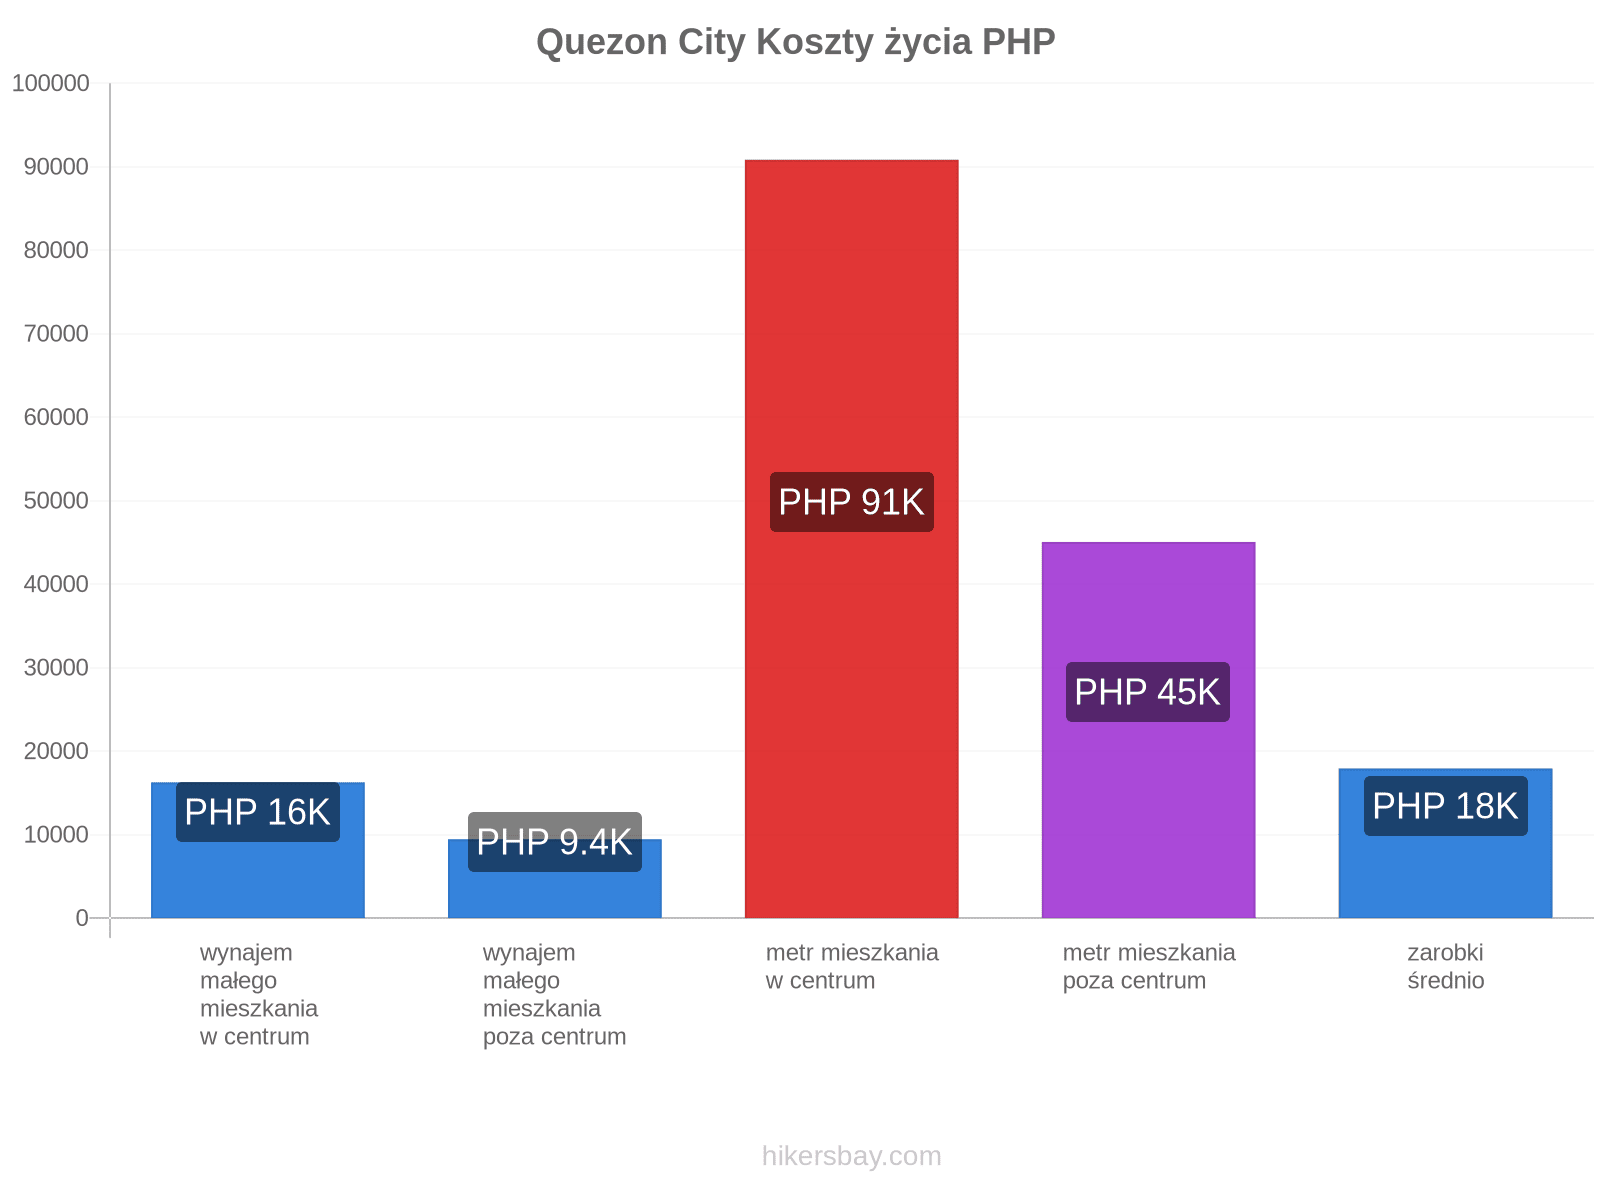 Quezon City koszty życia hikersbay.com